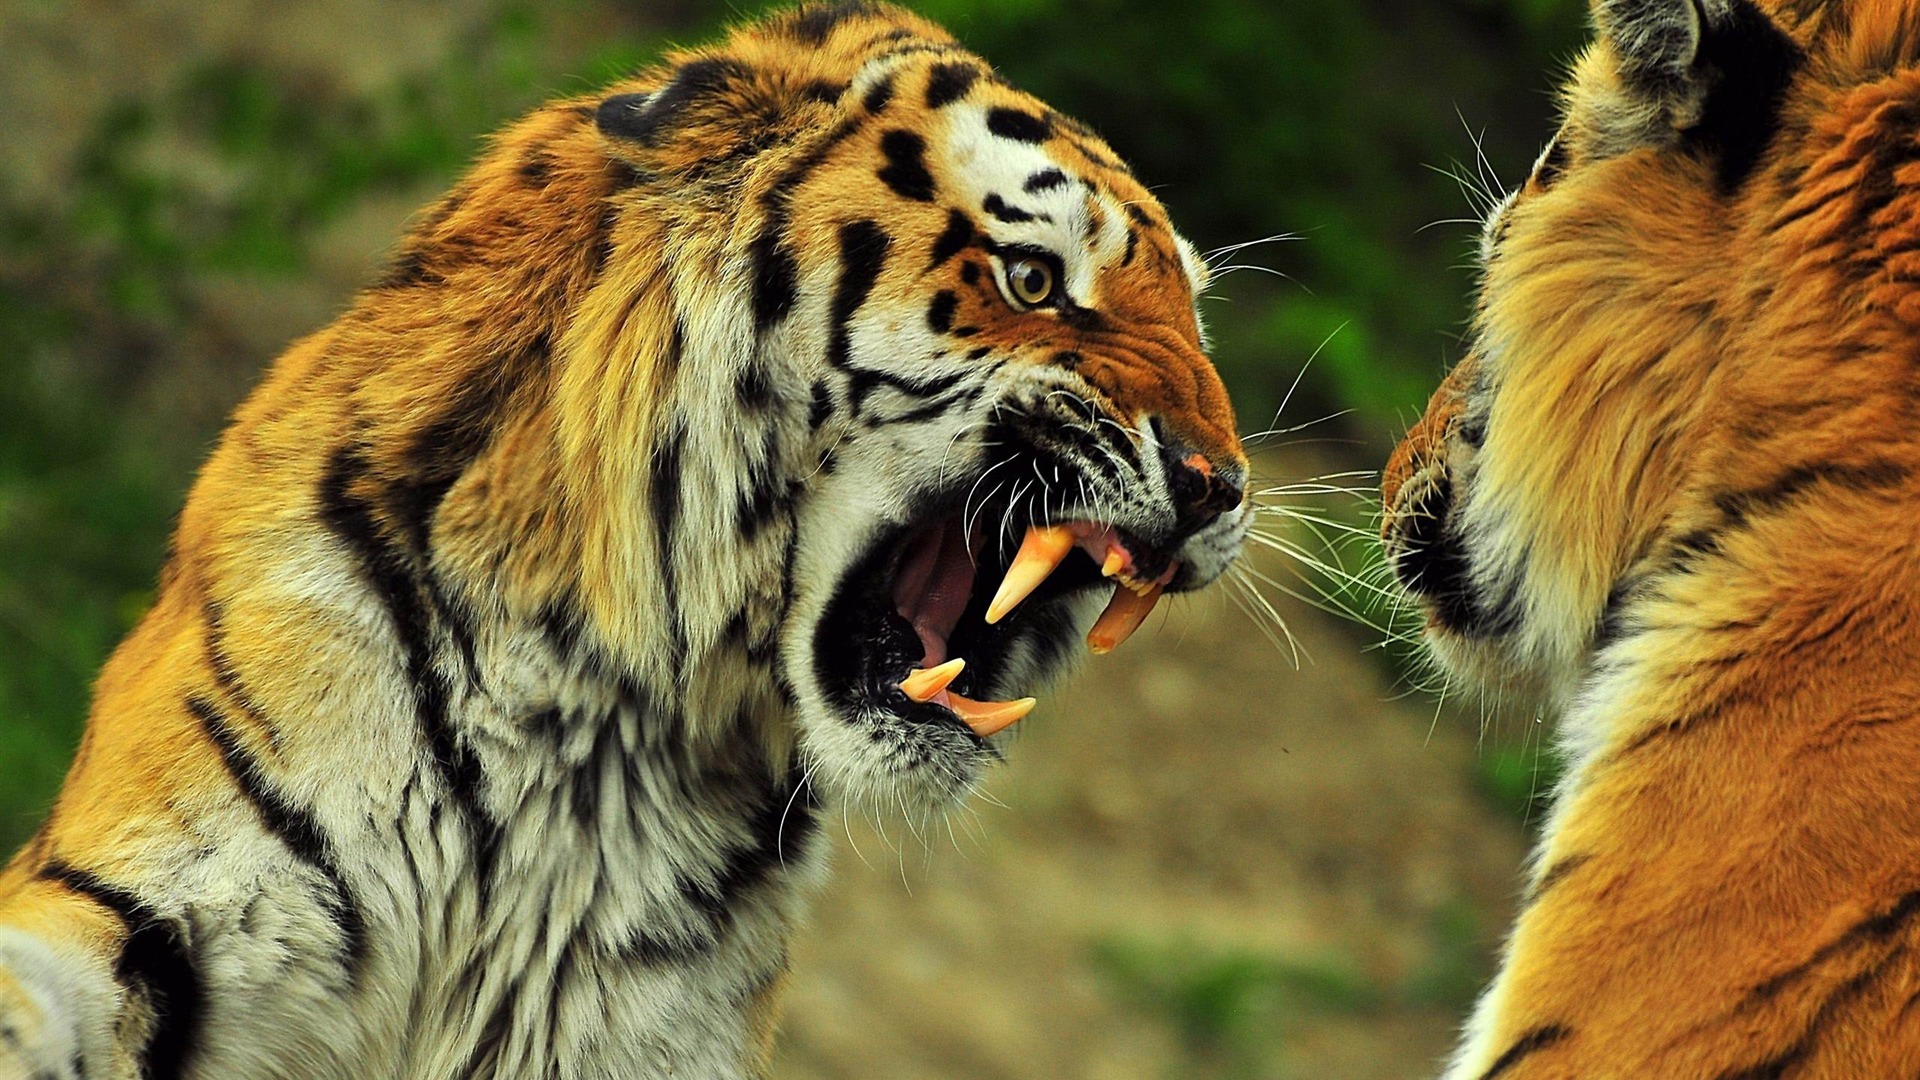 Tigers Roaring Wild Animal Desktop Wallpaper HD